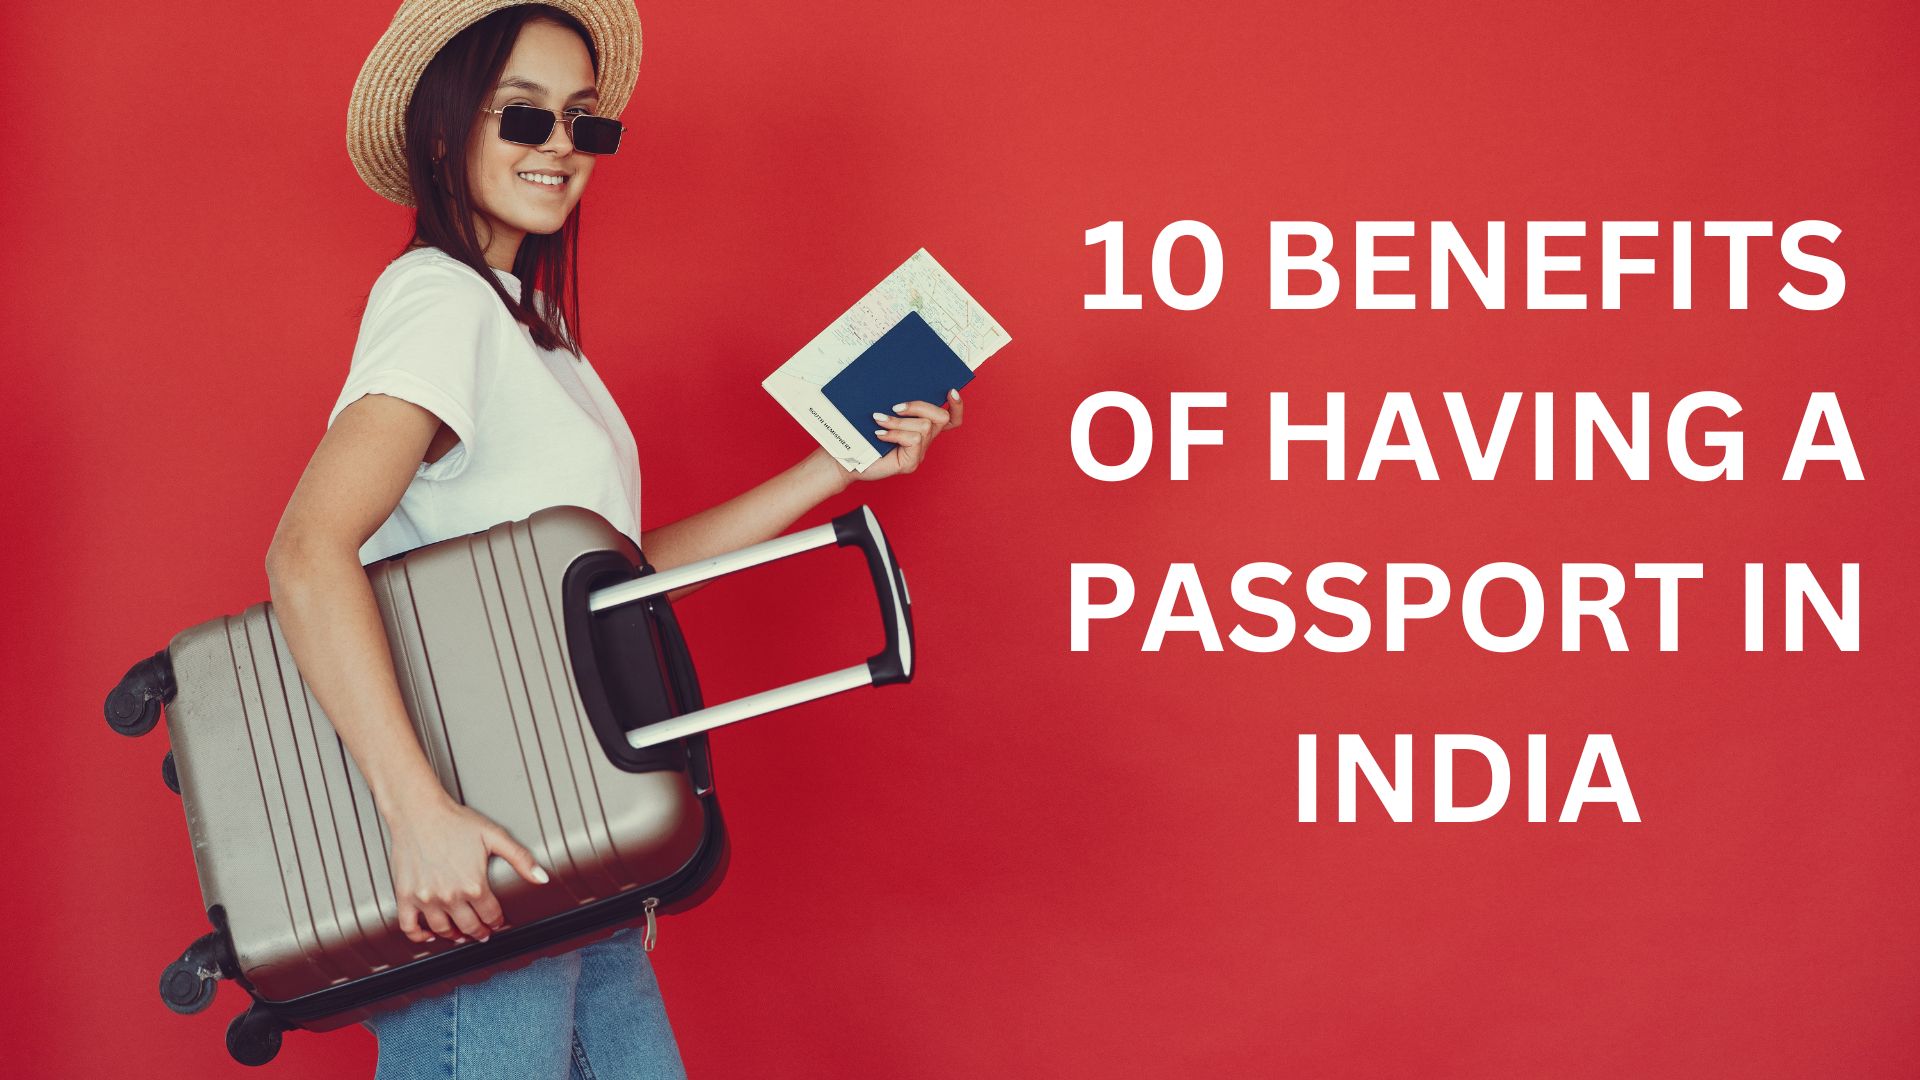 10 BENEFITS OF HAVING A PASSPORT IN INDIA